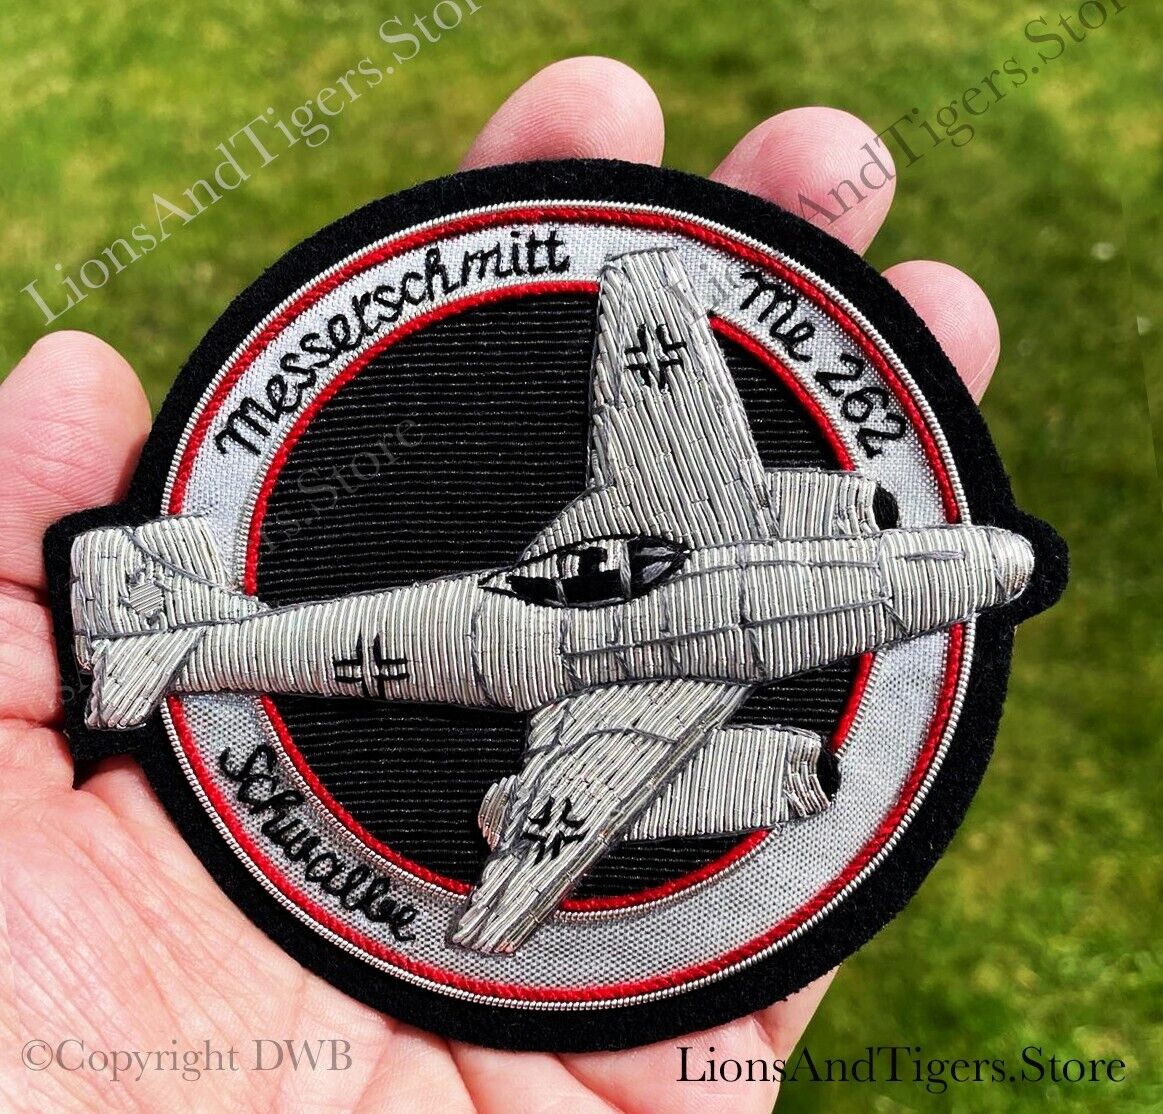 ME 262 WWII Messerschmitt Schwalbe Professionally Hand Embroidered Badge NEW